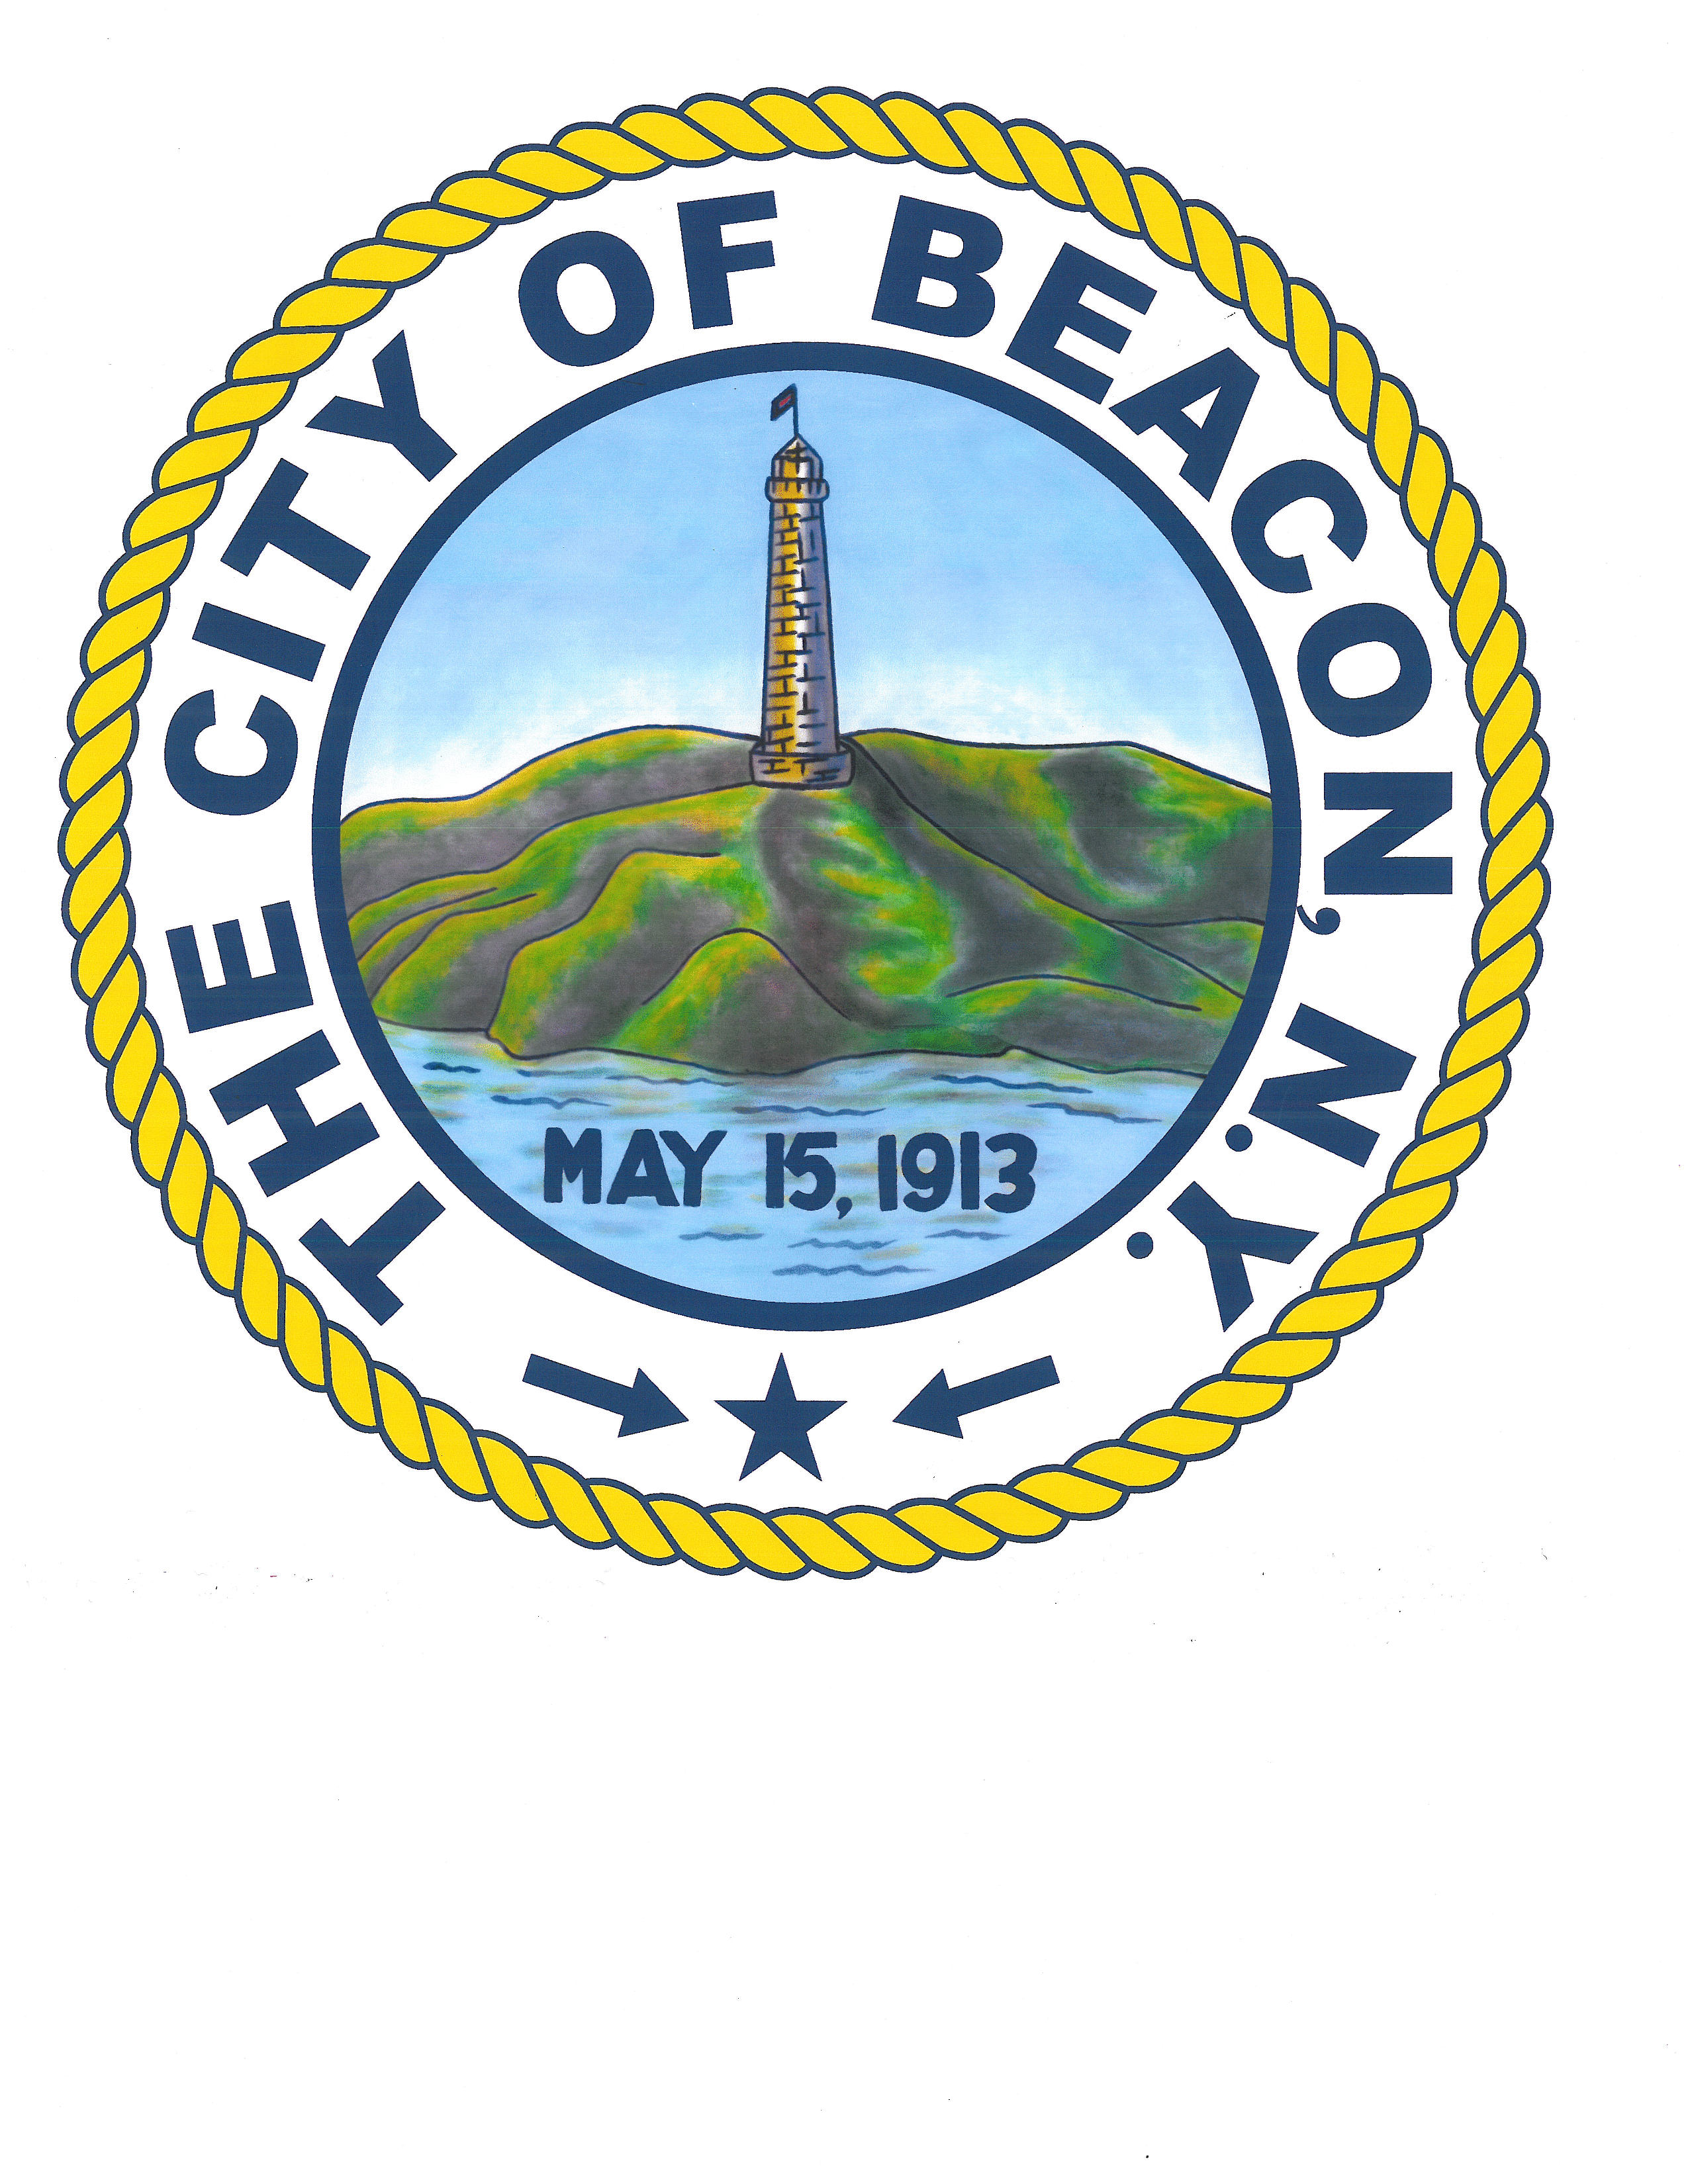 Organization logo of City of Beacon